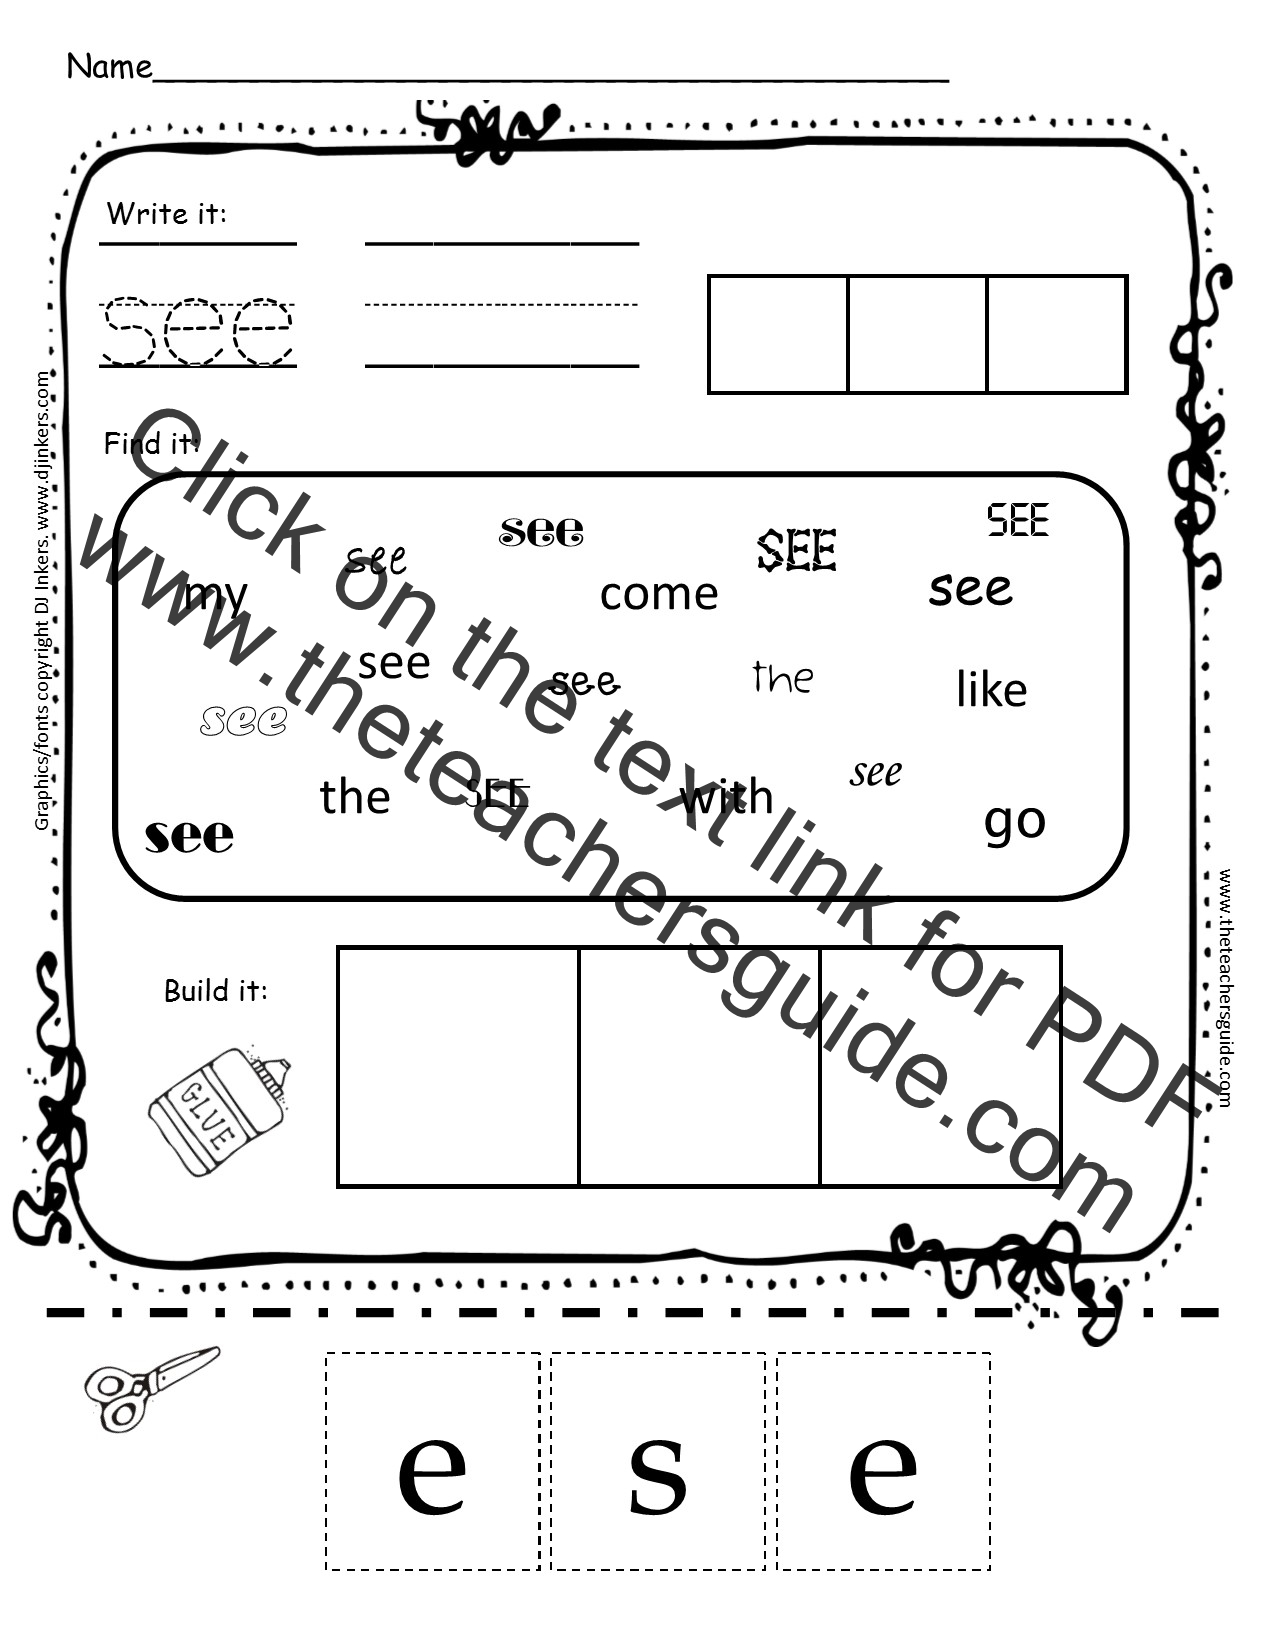 Kindergarten Sight Word Printouts from The Teacher's Guide